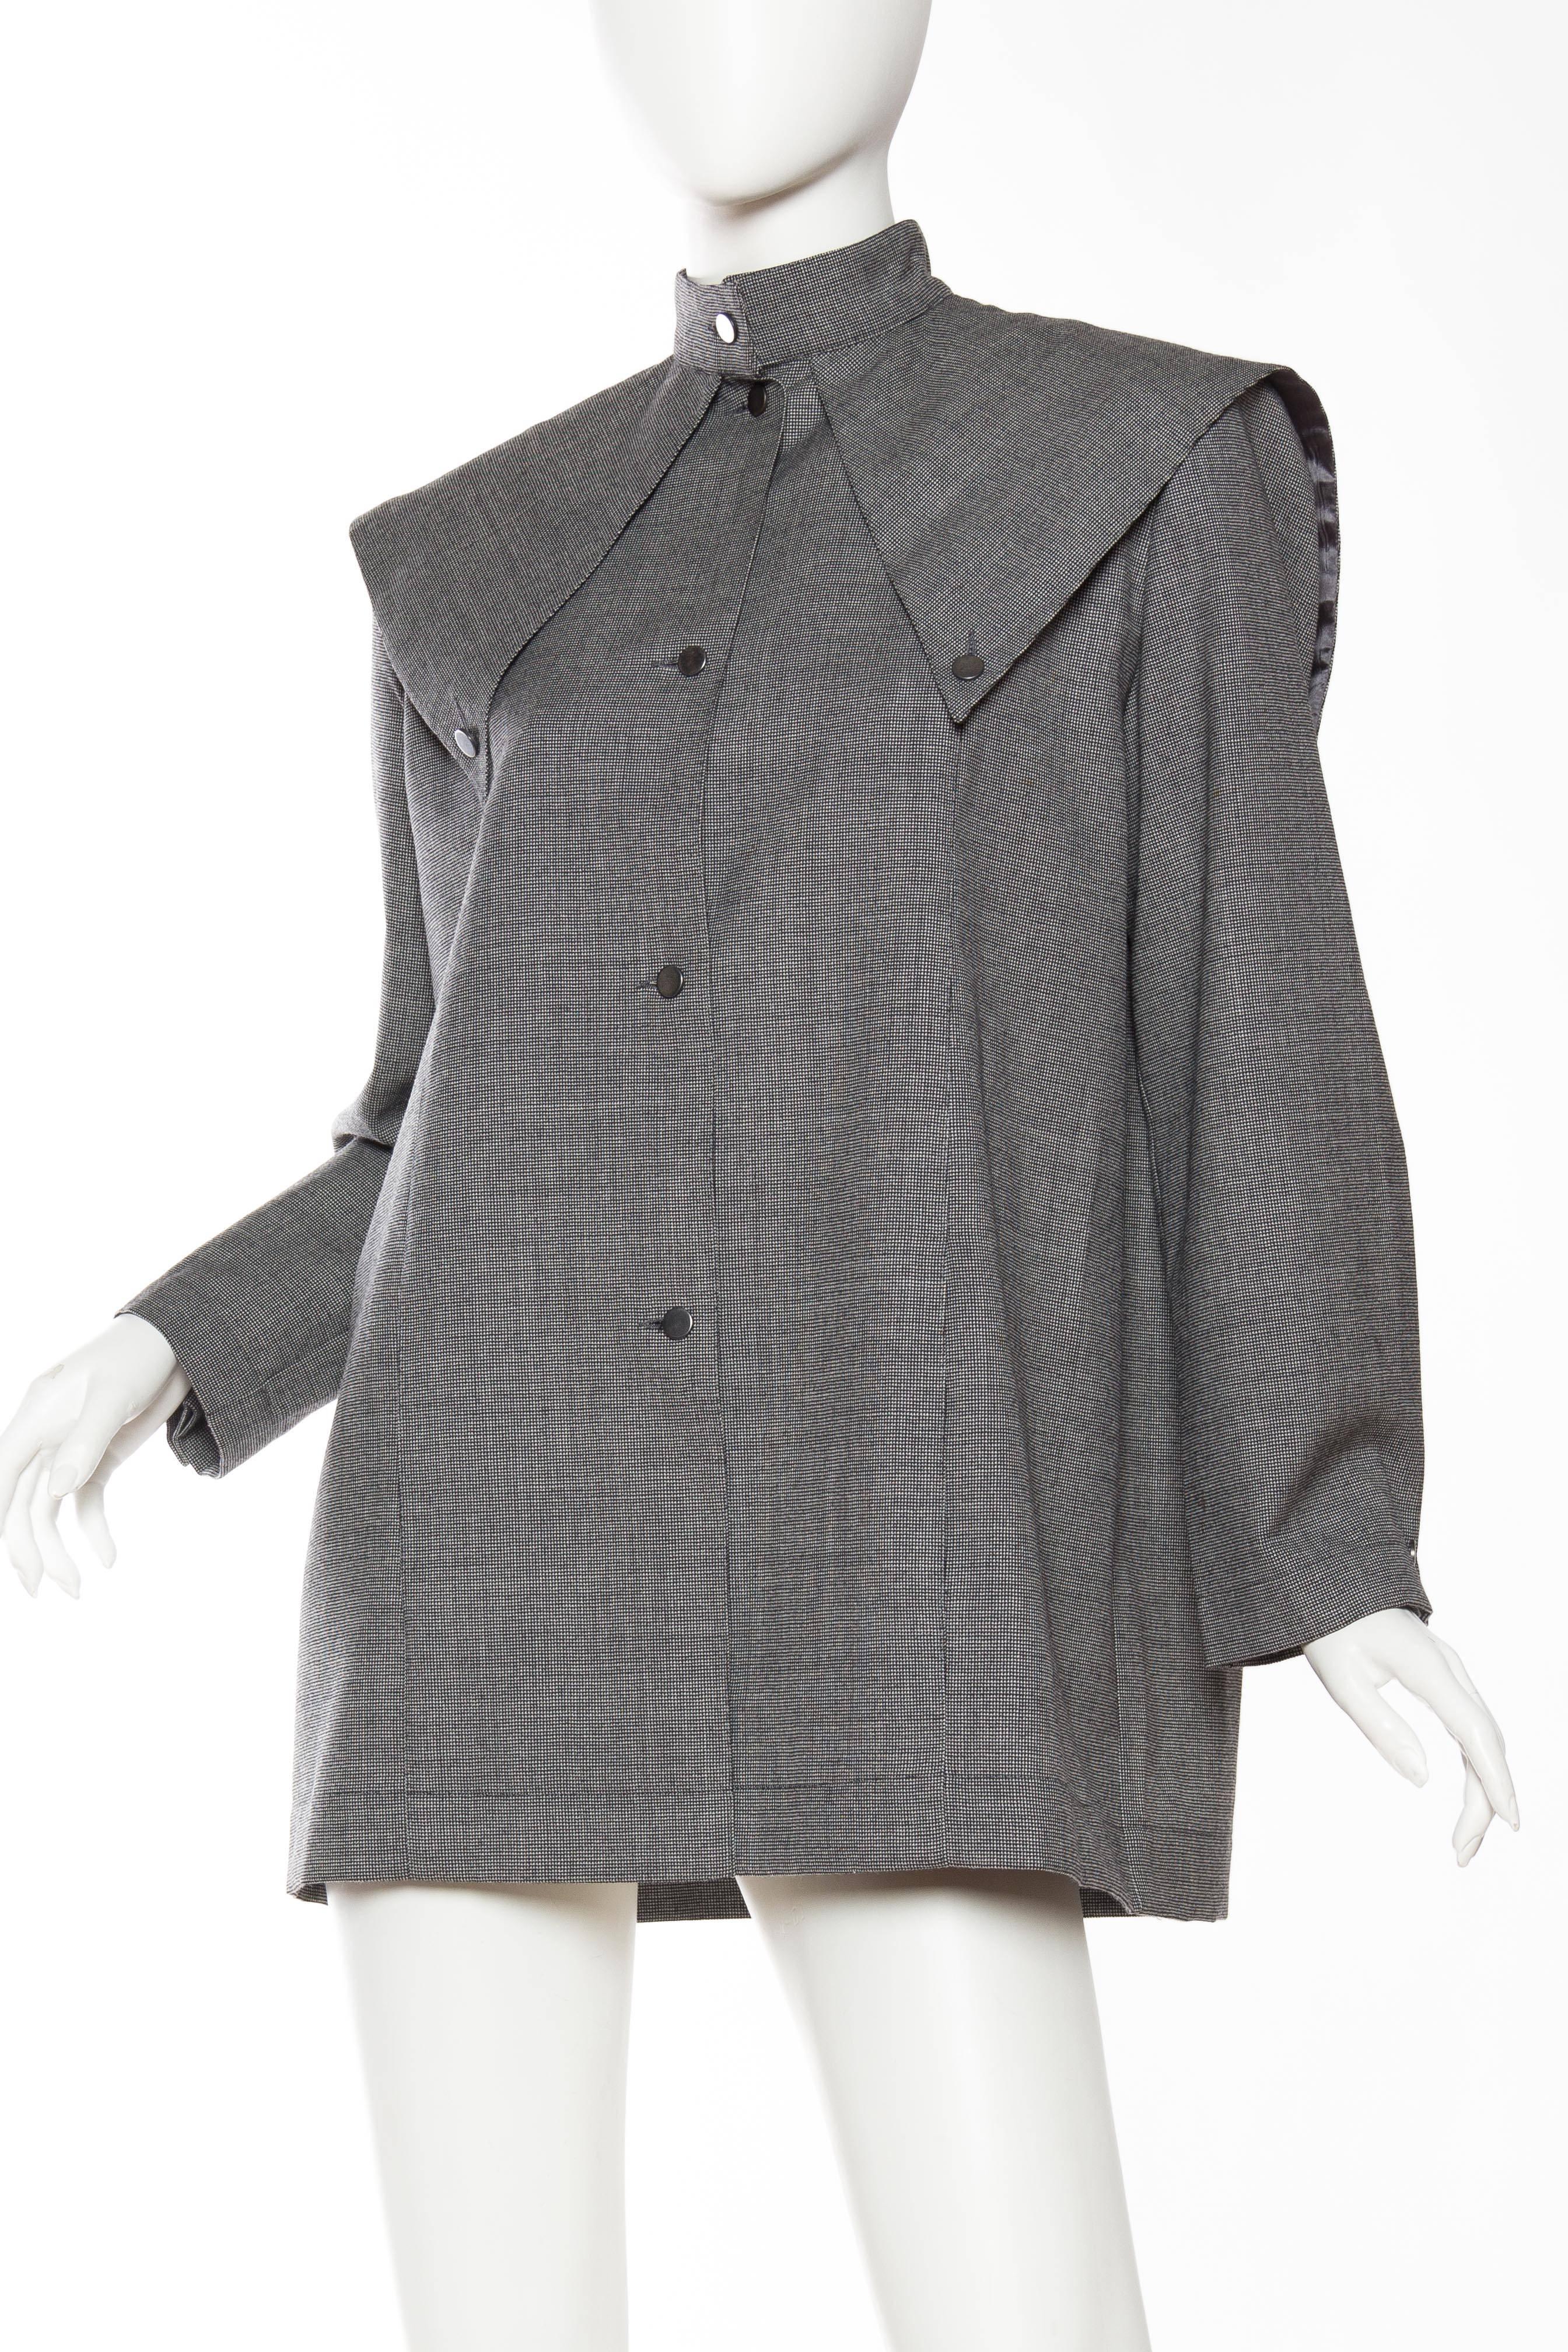 Gray Christian Dior Sharp Modernist Jacket